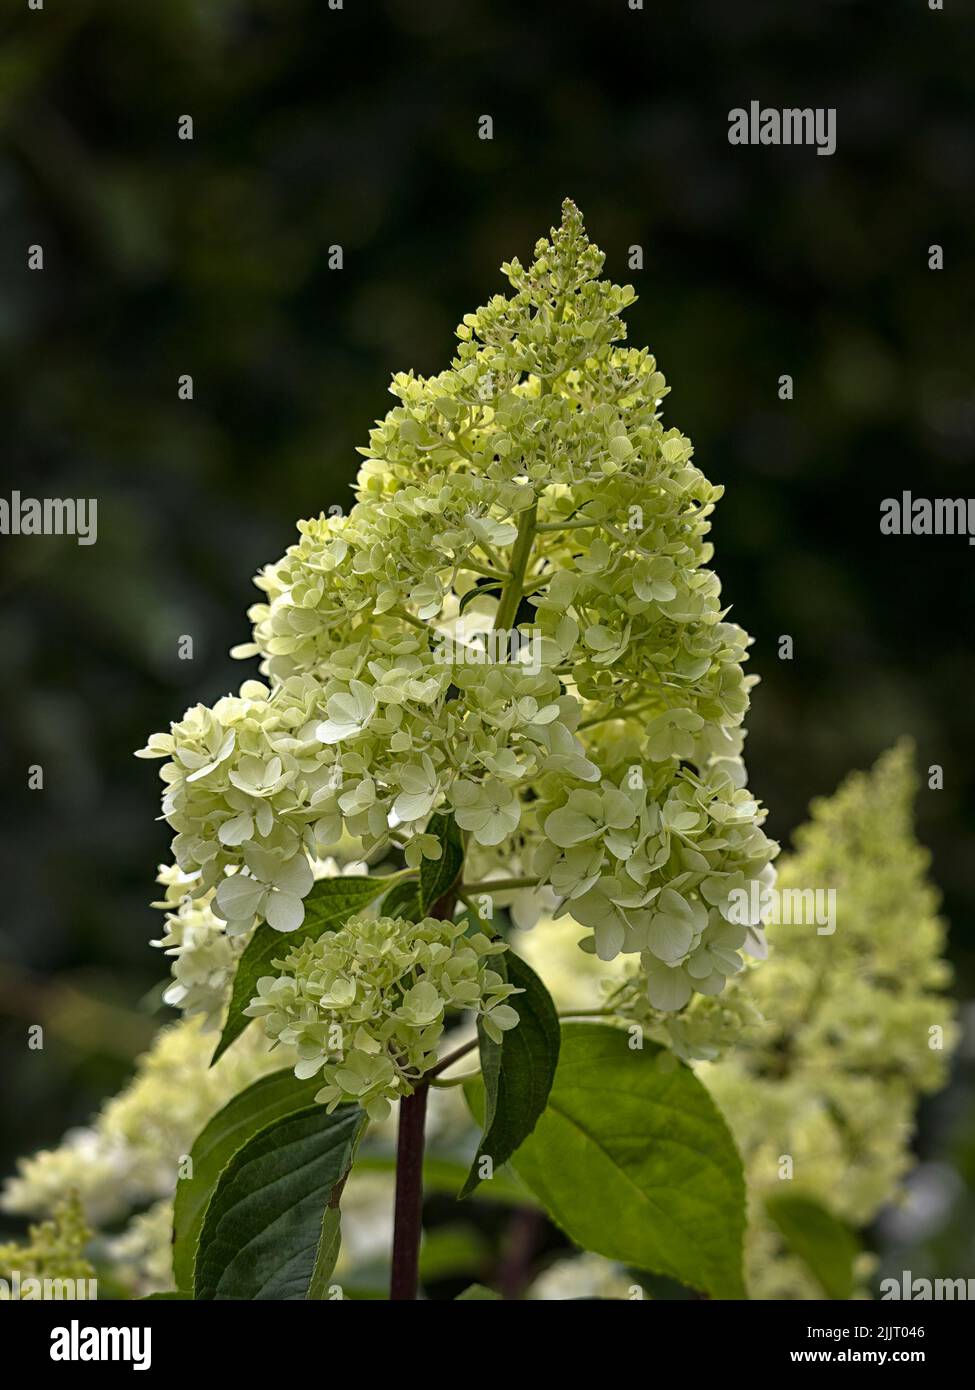 Newly opened Flowerhead of Hydrangea paniculata 'Vanille Fraise' against a dark background Stock Photo